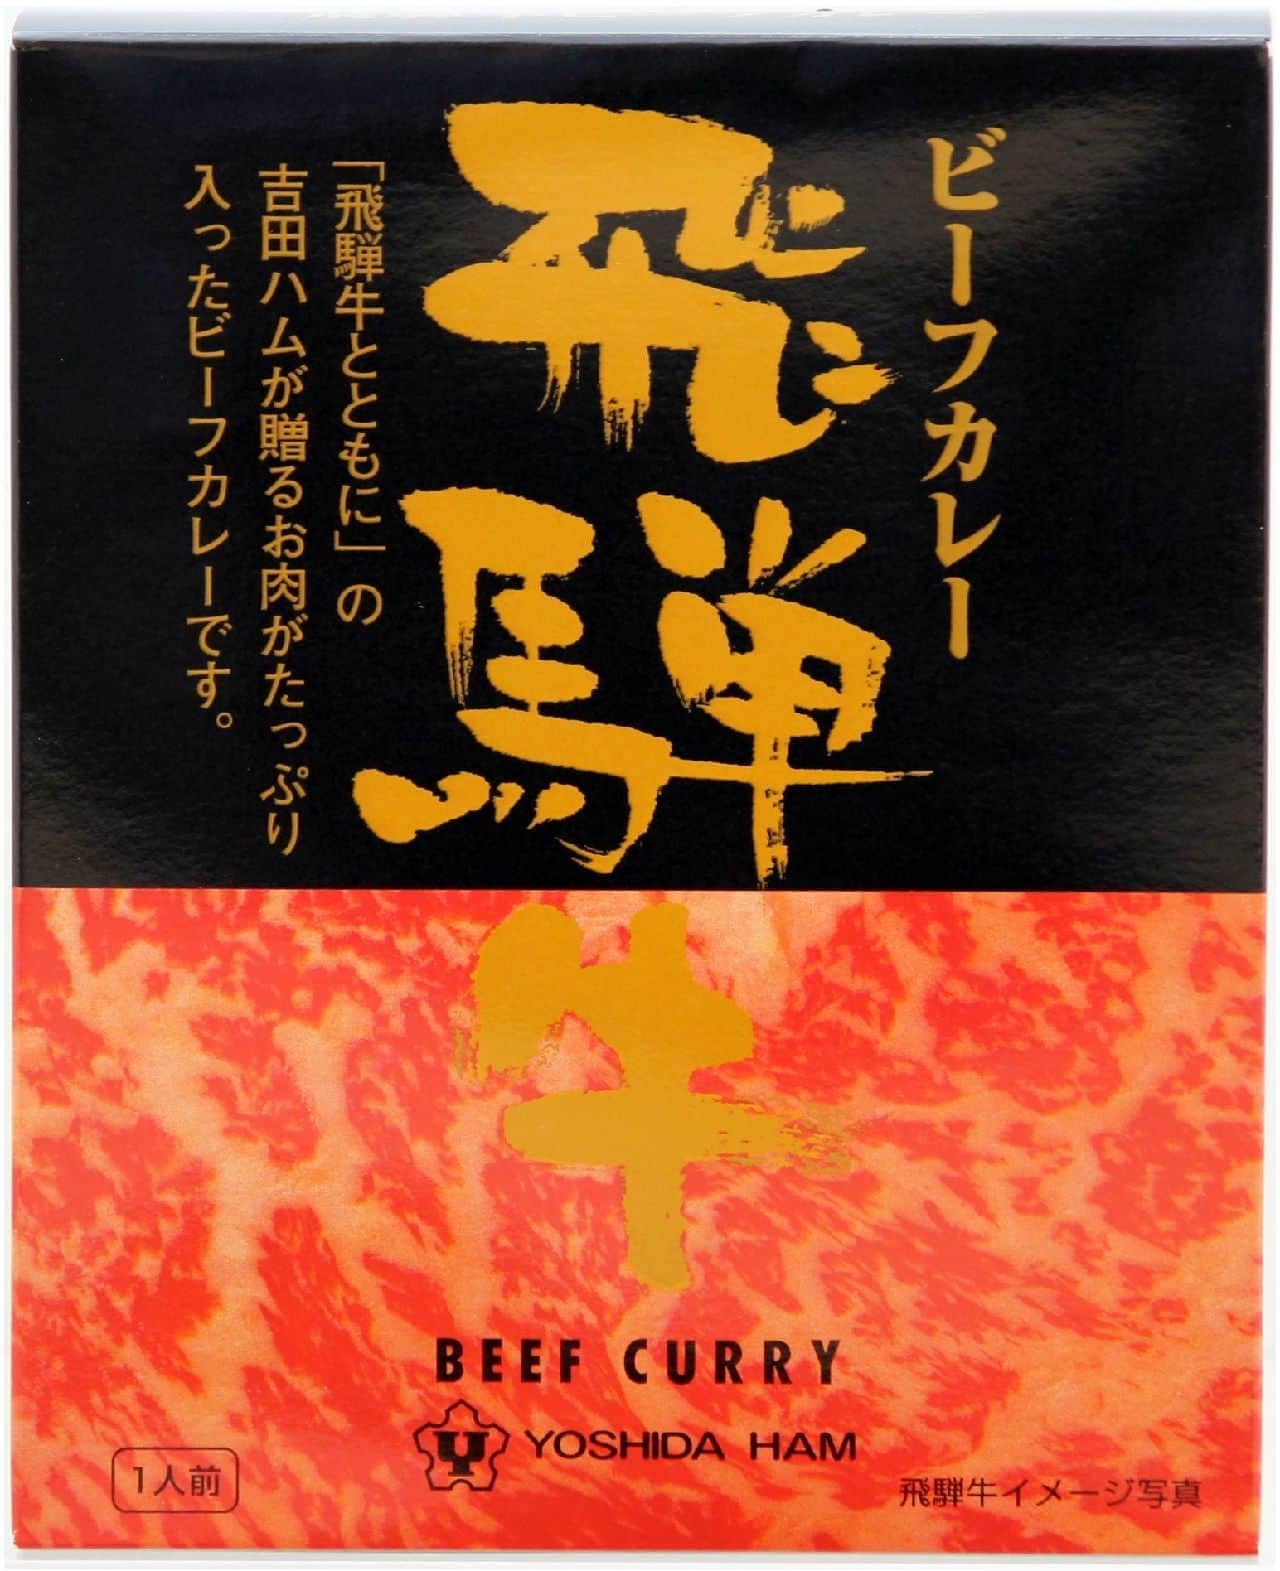 Kitano Ace "Curry Award" Corner